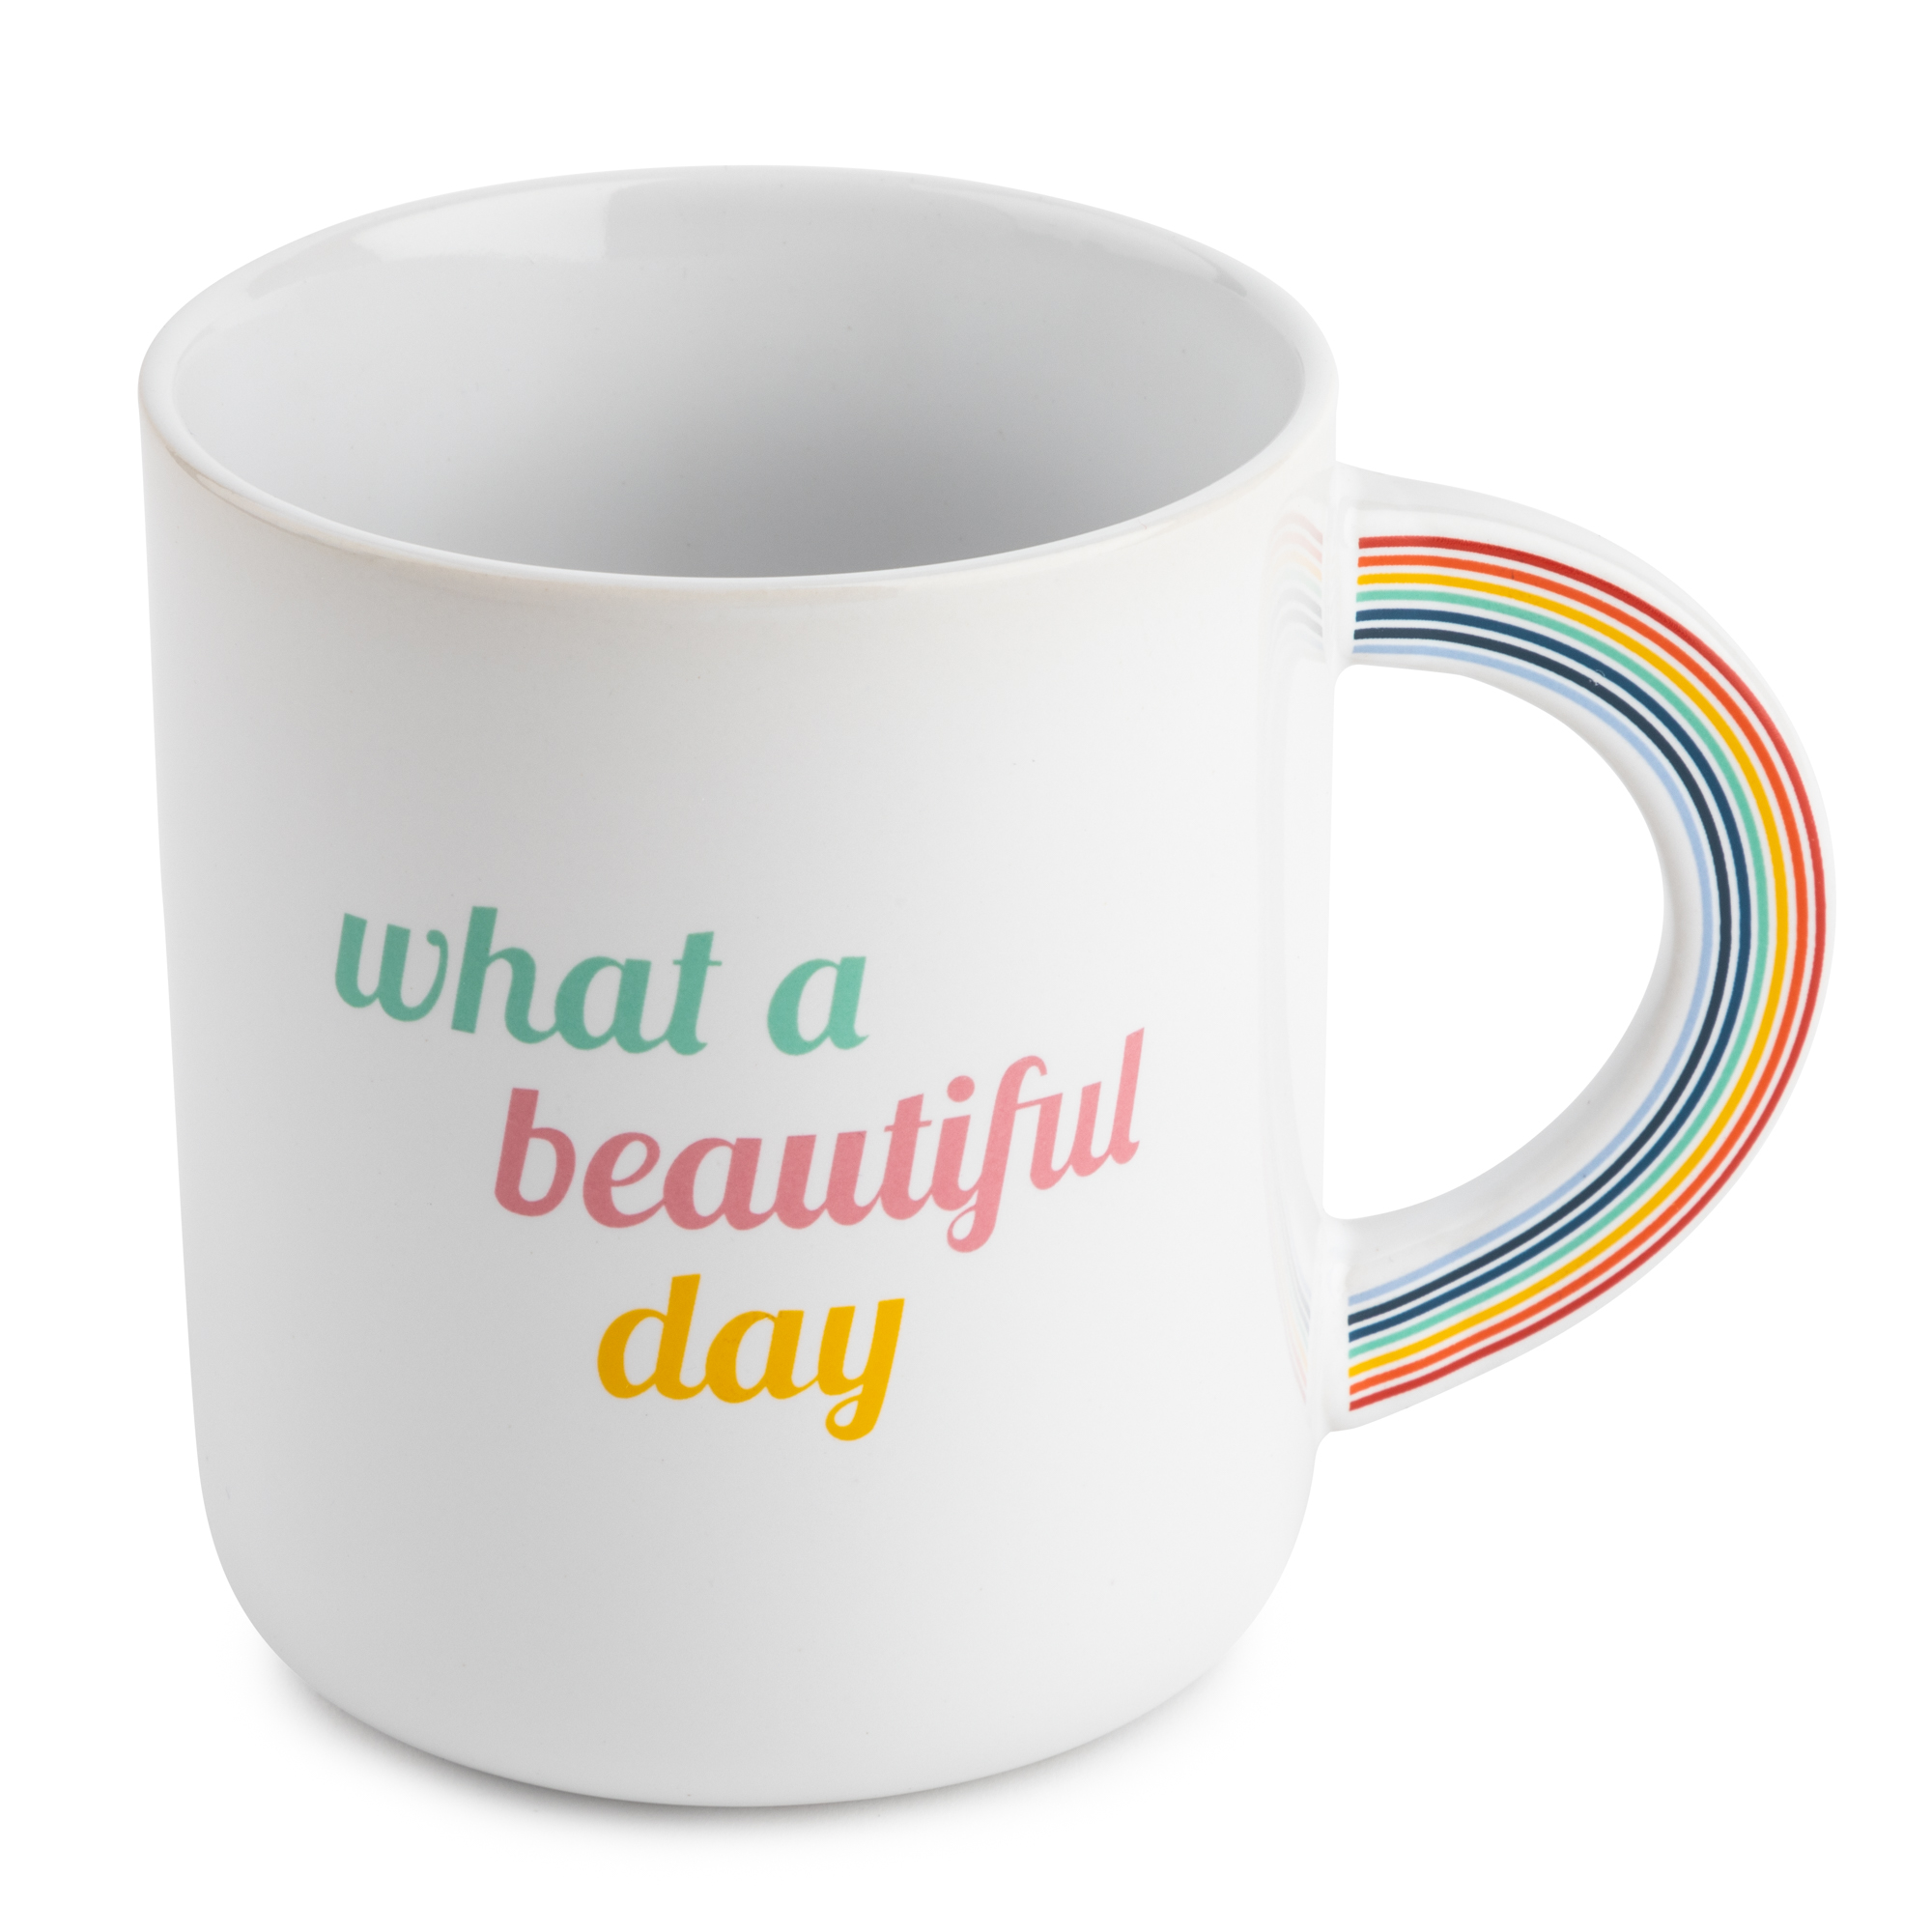 Thyme & Table Beautiful Day Ceramic Coffe Mug, 20 fl oz - image 1 of 6